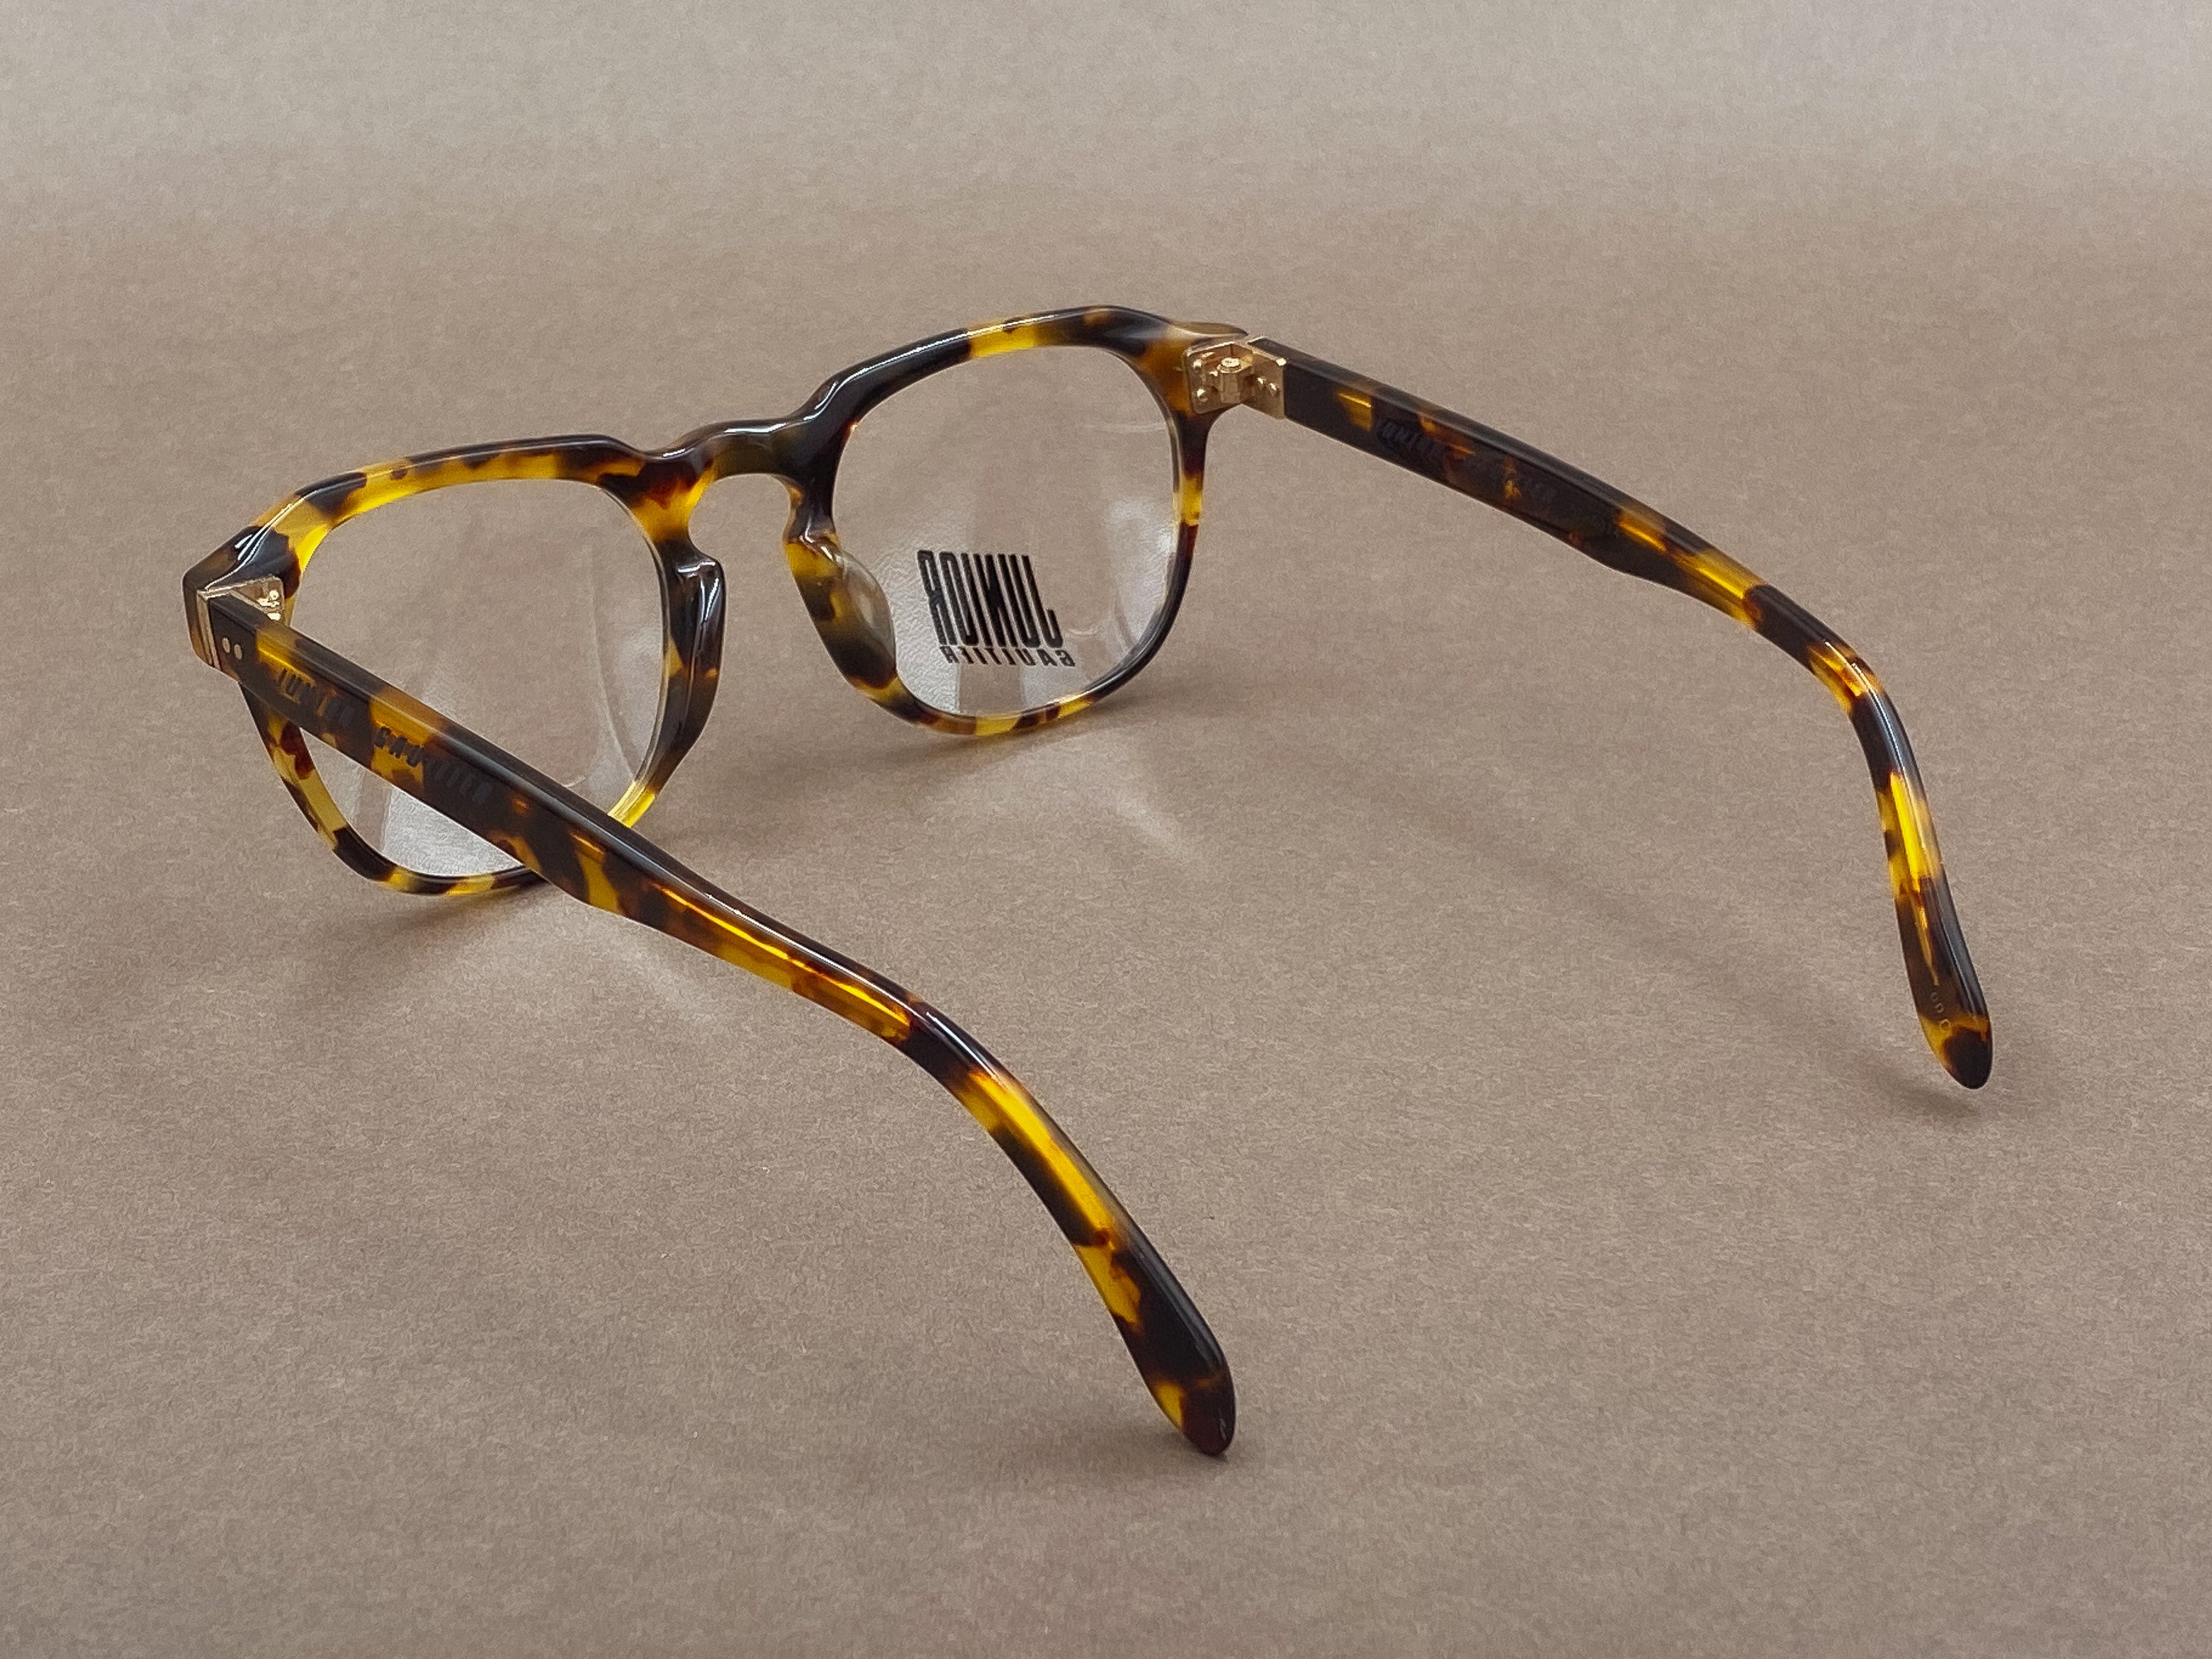 Junior Gaultier 57-0074 glasses